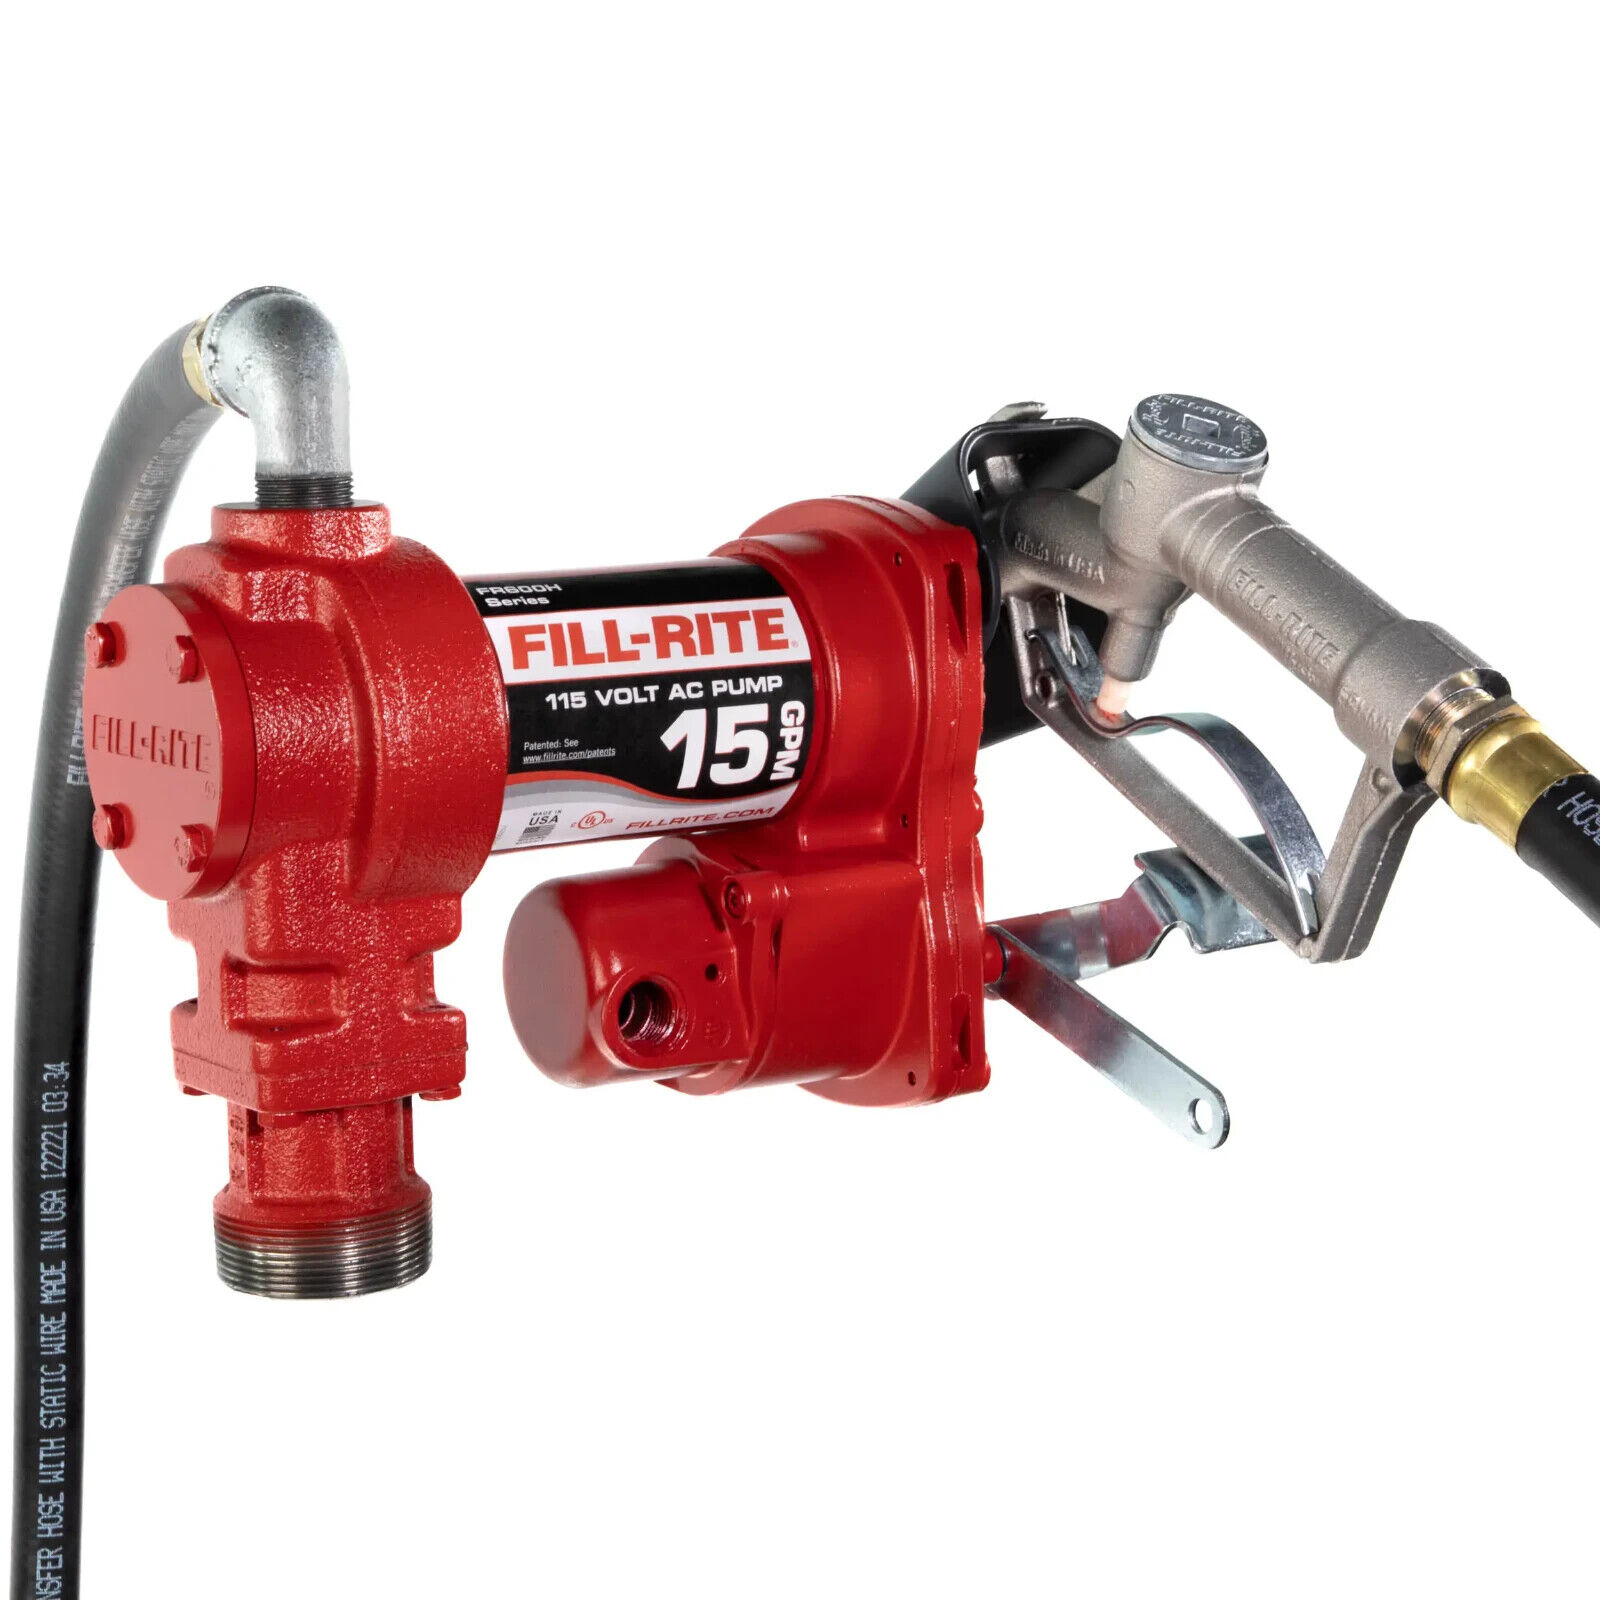 Fill-Rite FR610H 115V 15 GPM Fuel Transfer Pump Red For Gasoline Diesel Kerosene